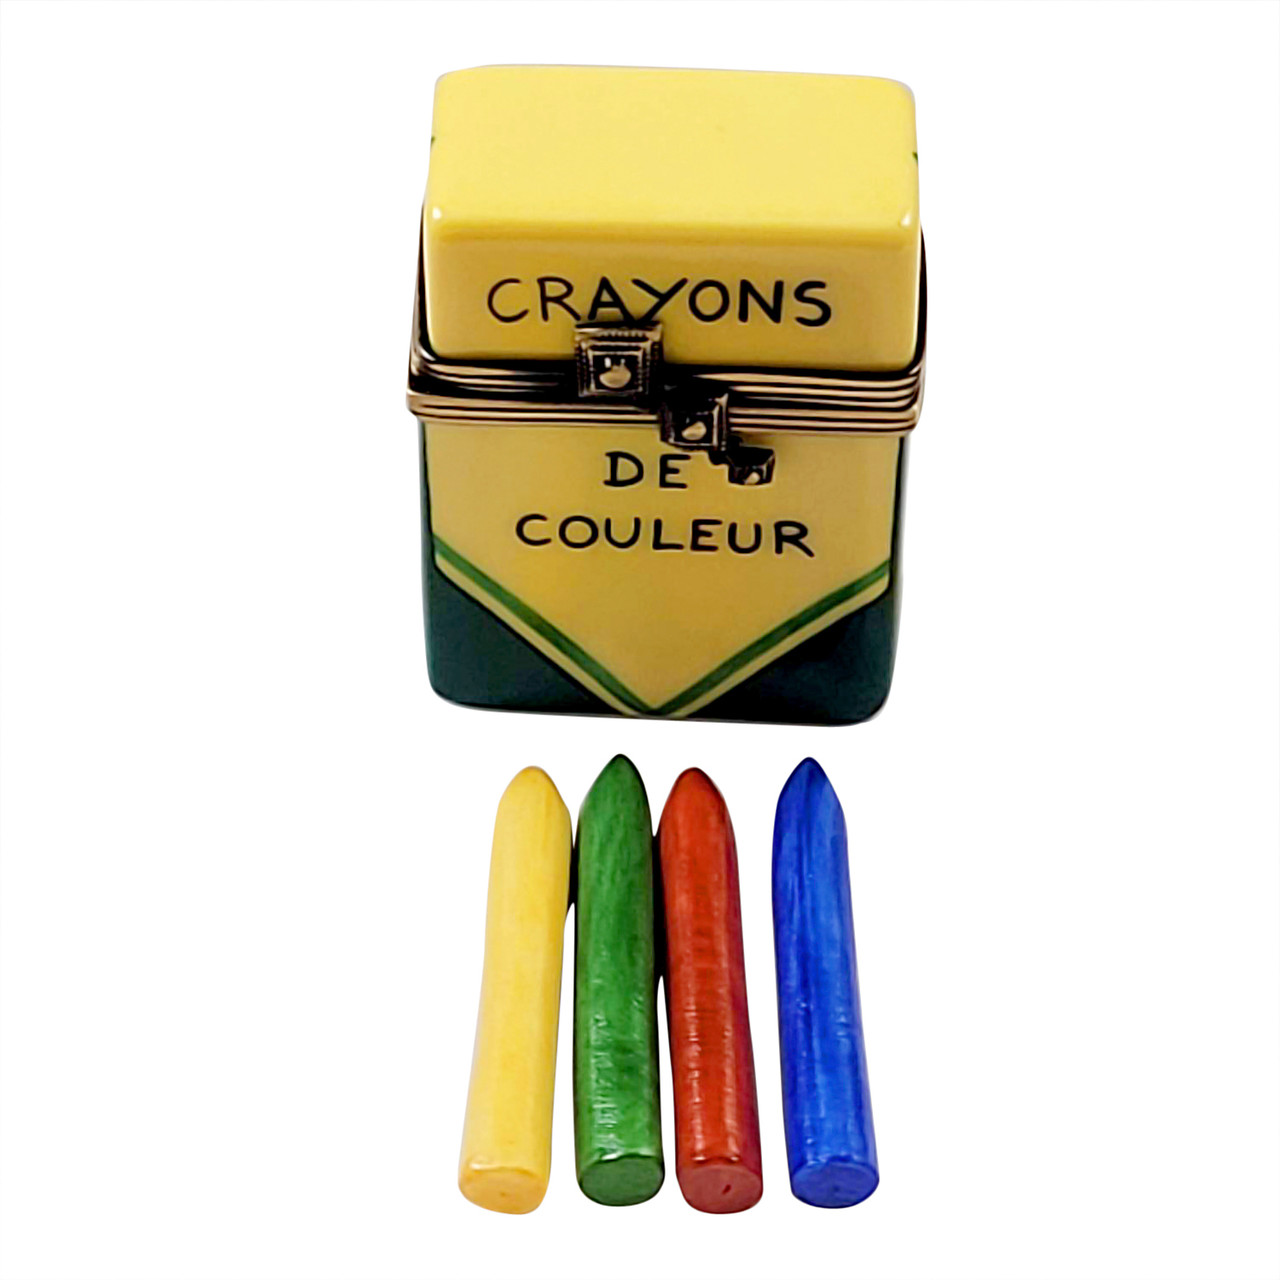 Crayon Box Rochard Limoges Box RB105